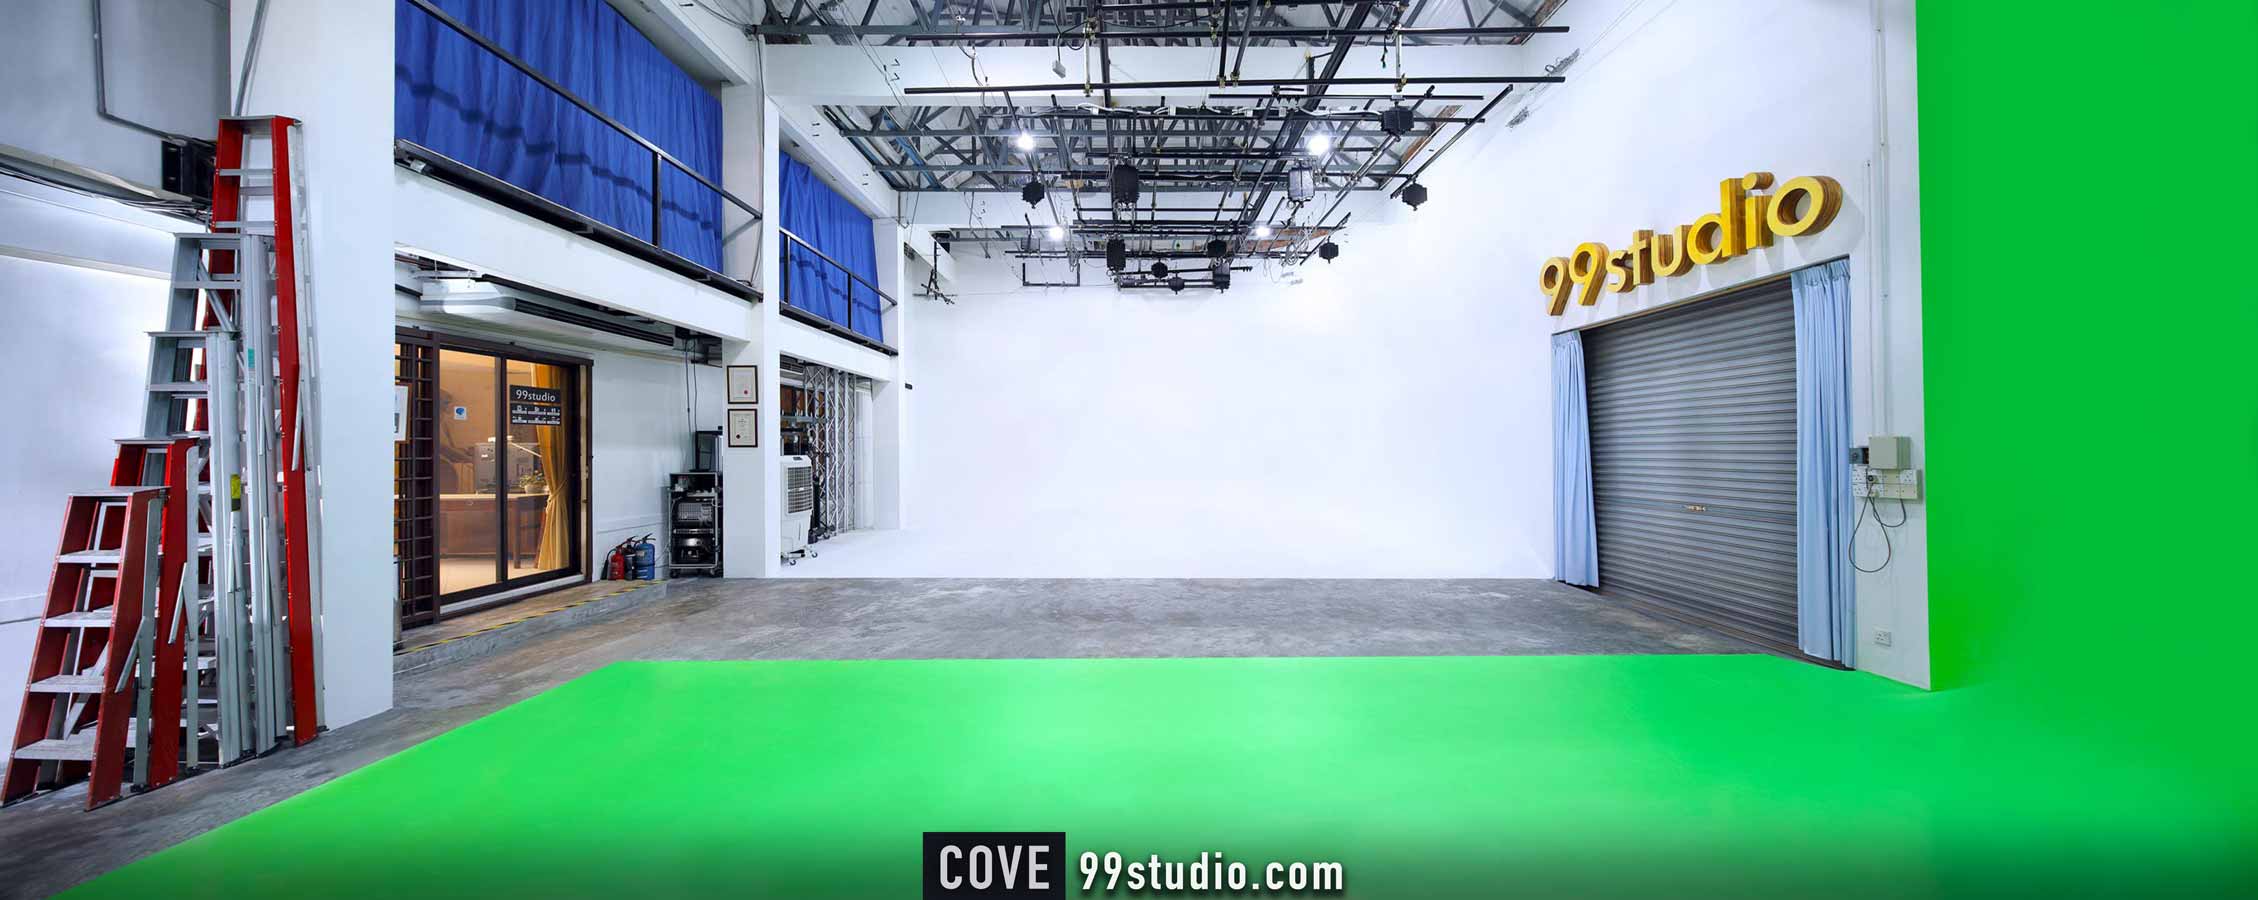 Cove by 99studio.com